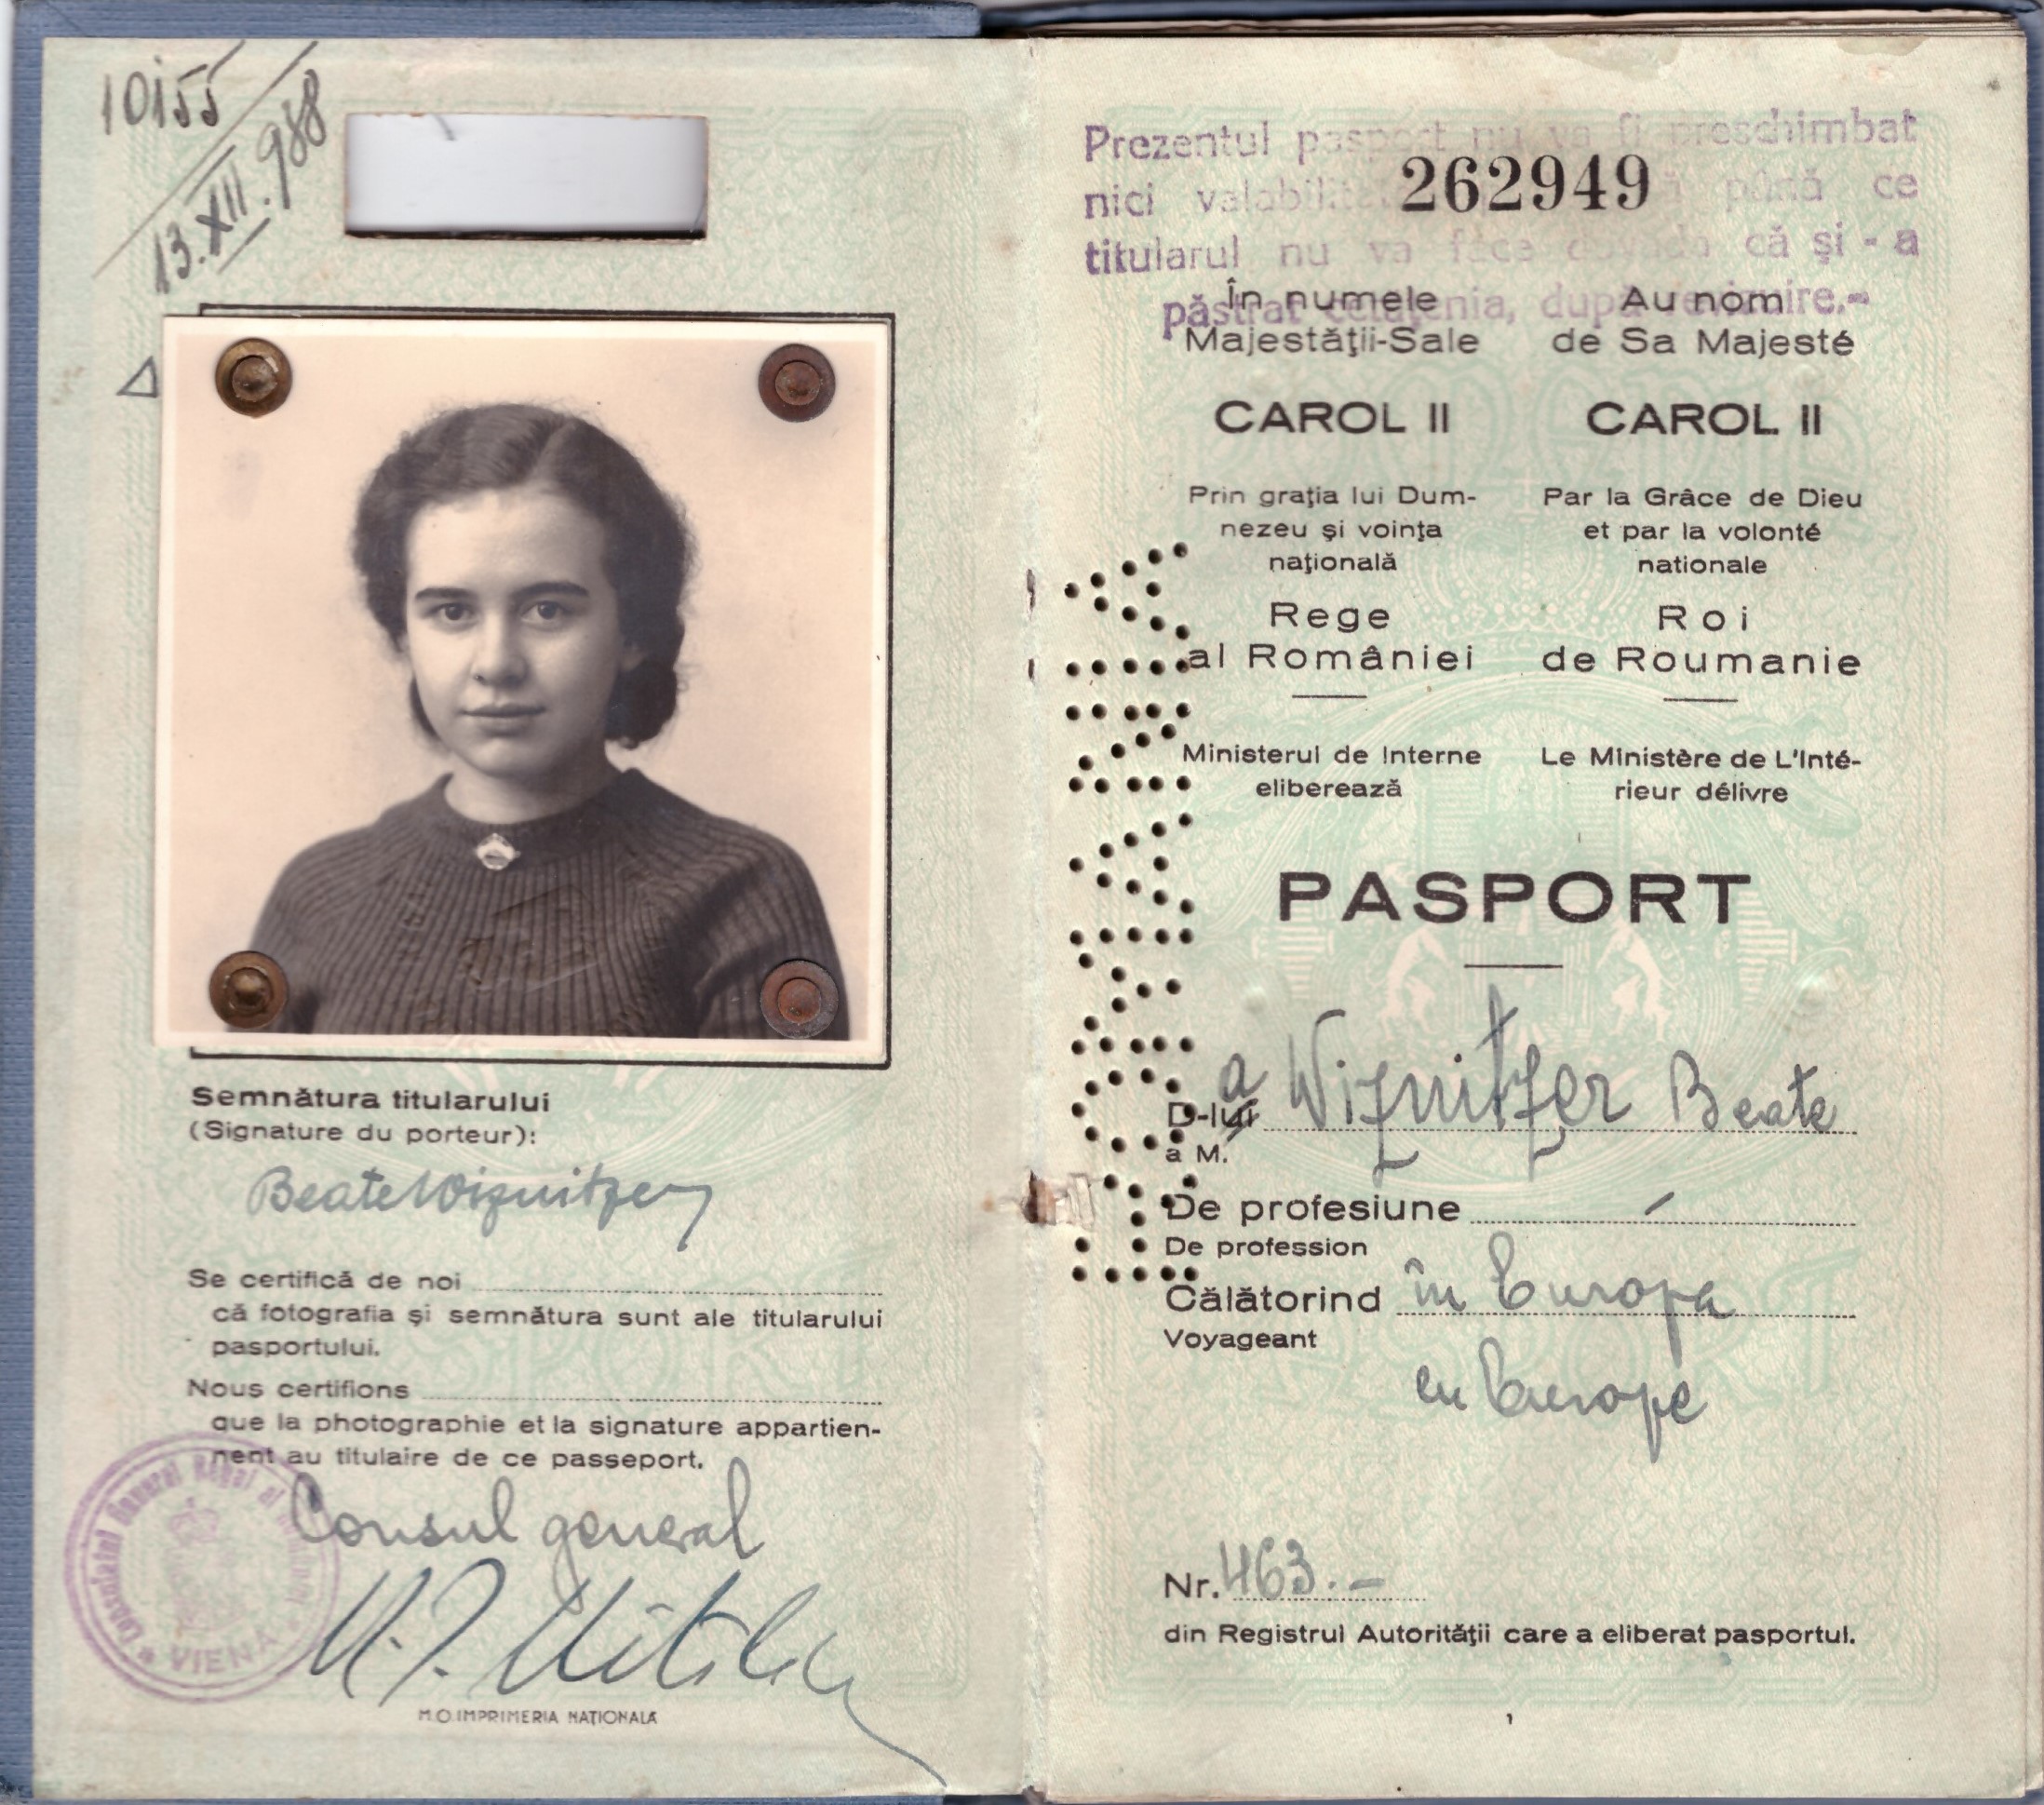 Passport of alumnus Andrew Popperwell's late mother, Beate Popperwell (nee Wiznitzer, 1924-2001)